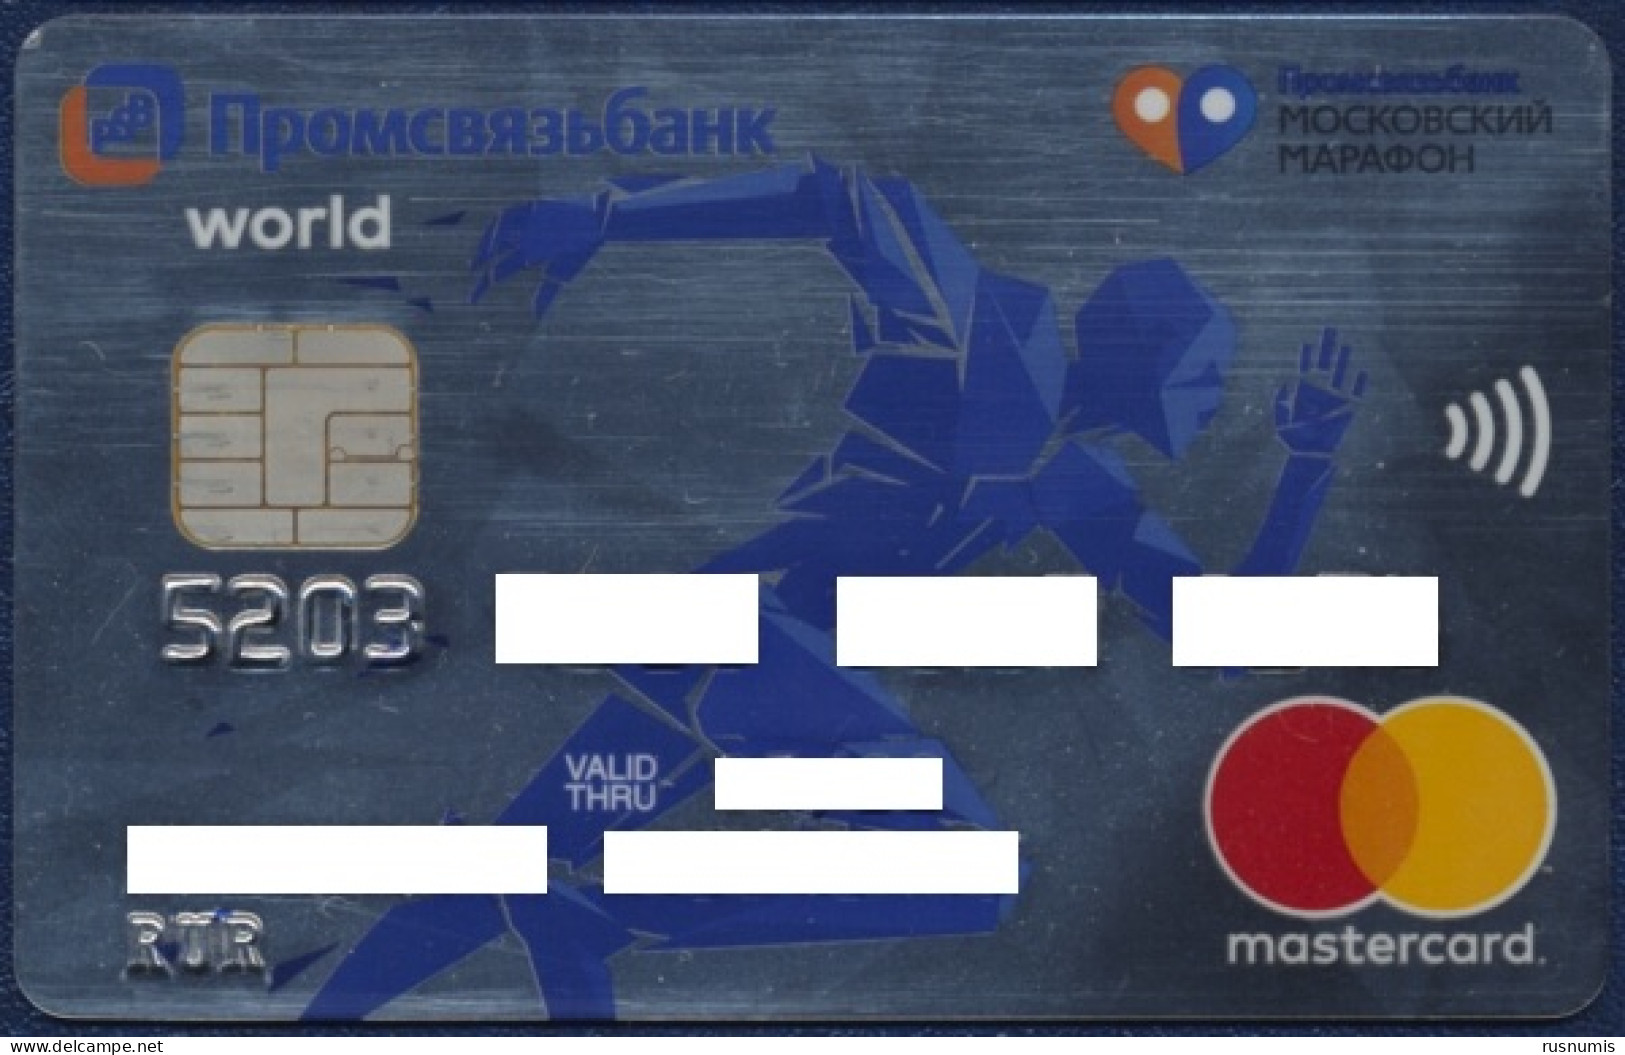 RUSSIA - RUSSIE - RUSSLAND PROMSVYAZBANK MASTERCARD BANK CARD SPORT MARATHON EXPIRED - Krediet Kaarten (vervaldatum Min. 10 Jaar)